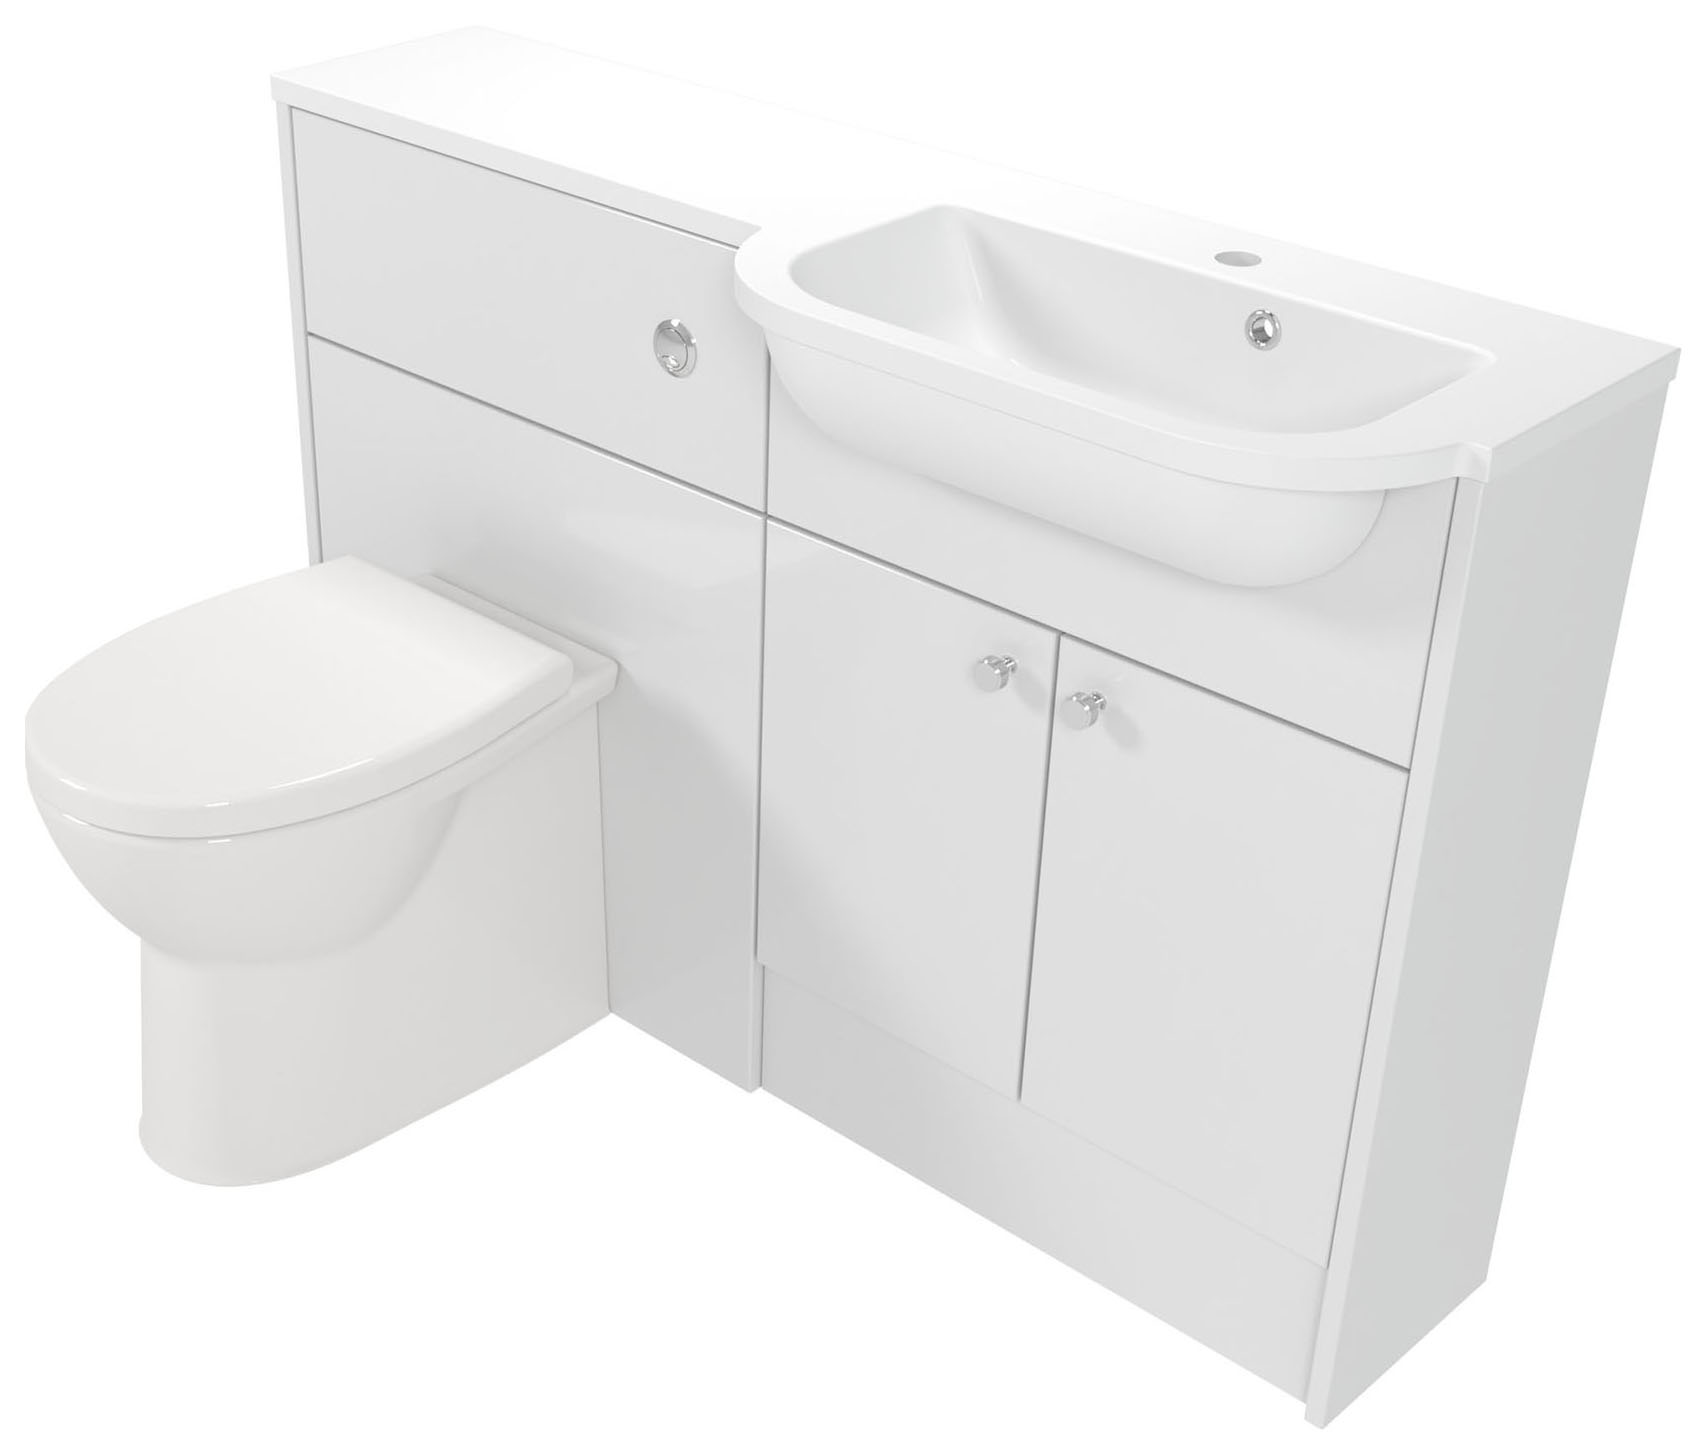 Deccado Benham Bright White 1200mm Slimline Fitted Vanity & Toilet Pan Unit Combination with Basin